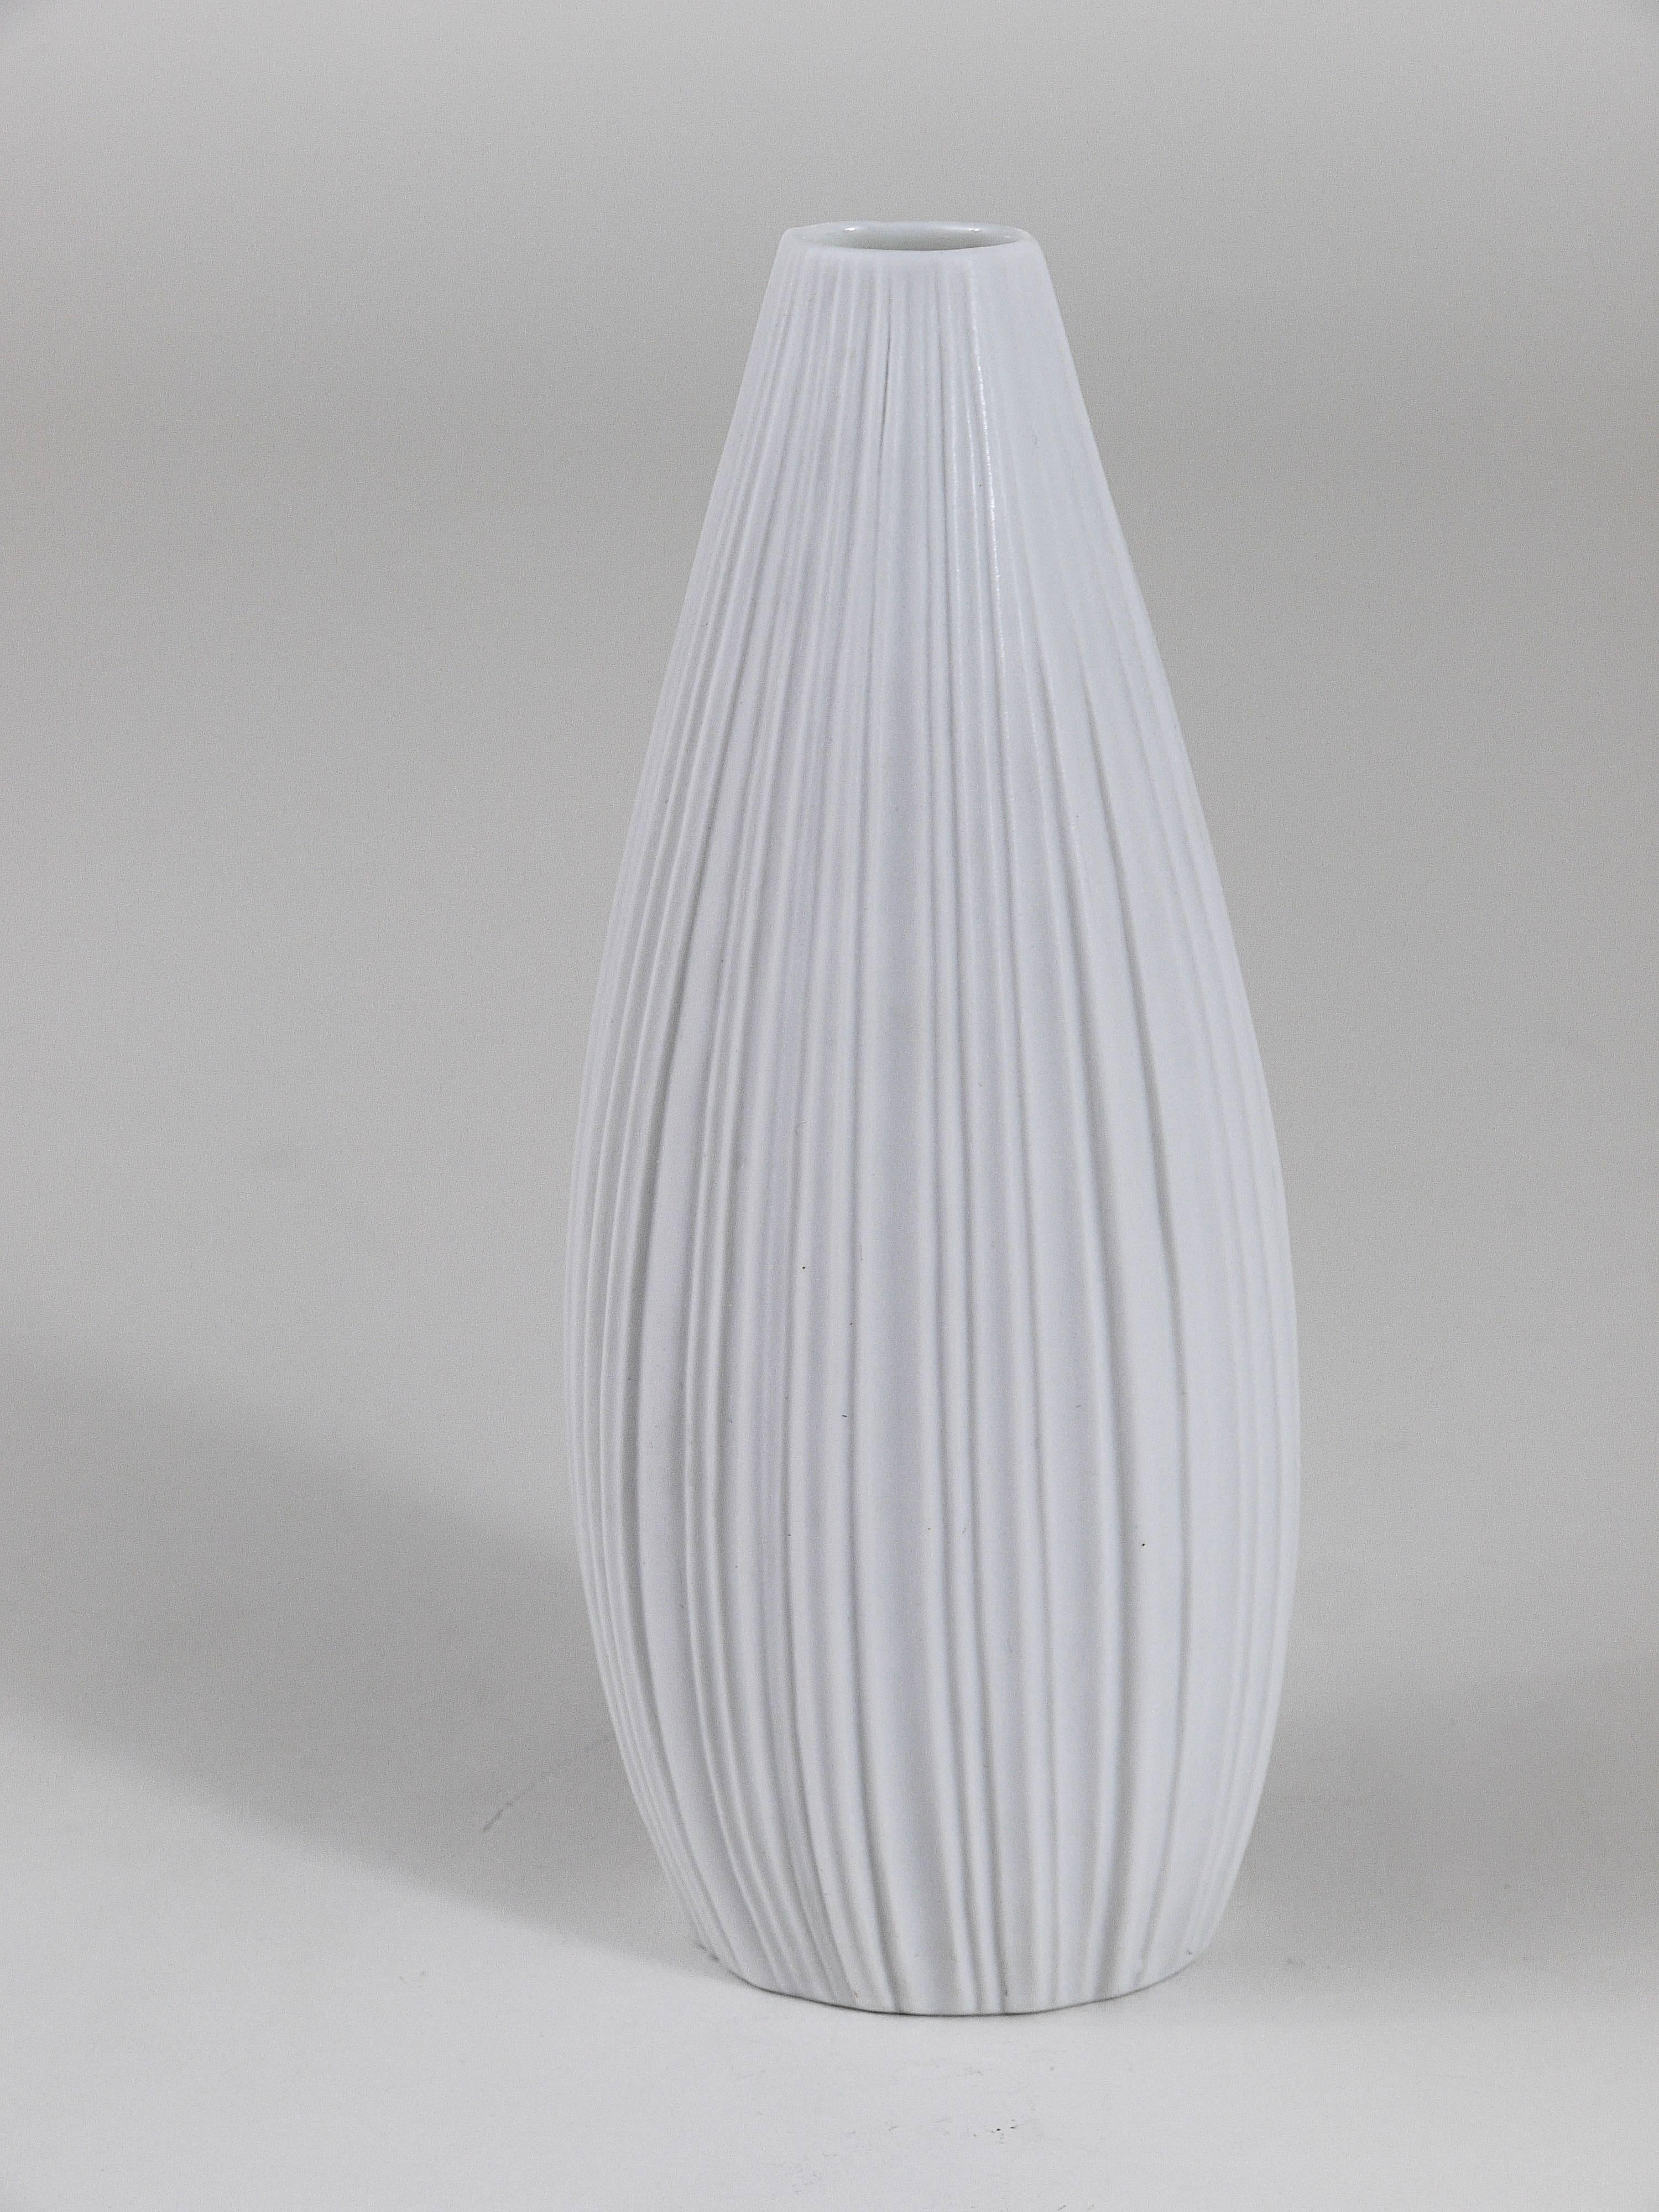 White Relief Striped Porcelain Vase, Martin Freyer, Rosenthal, Germany, 1960s For Sale 1